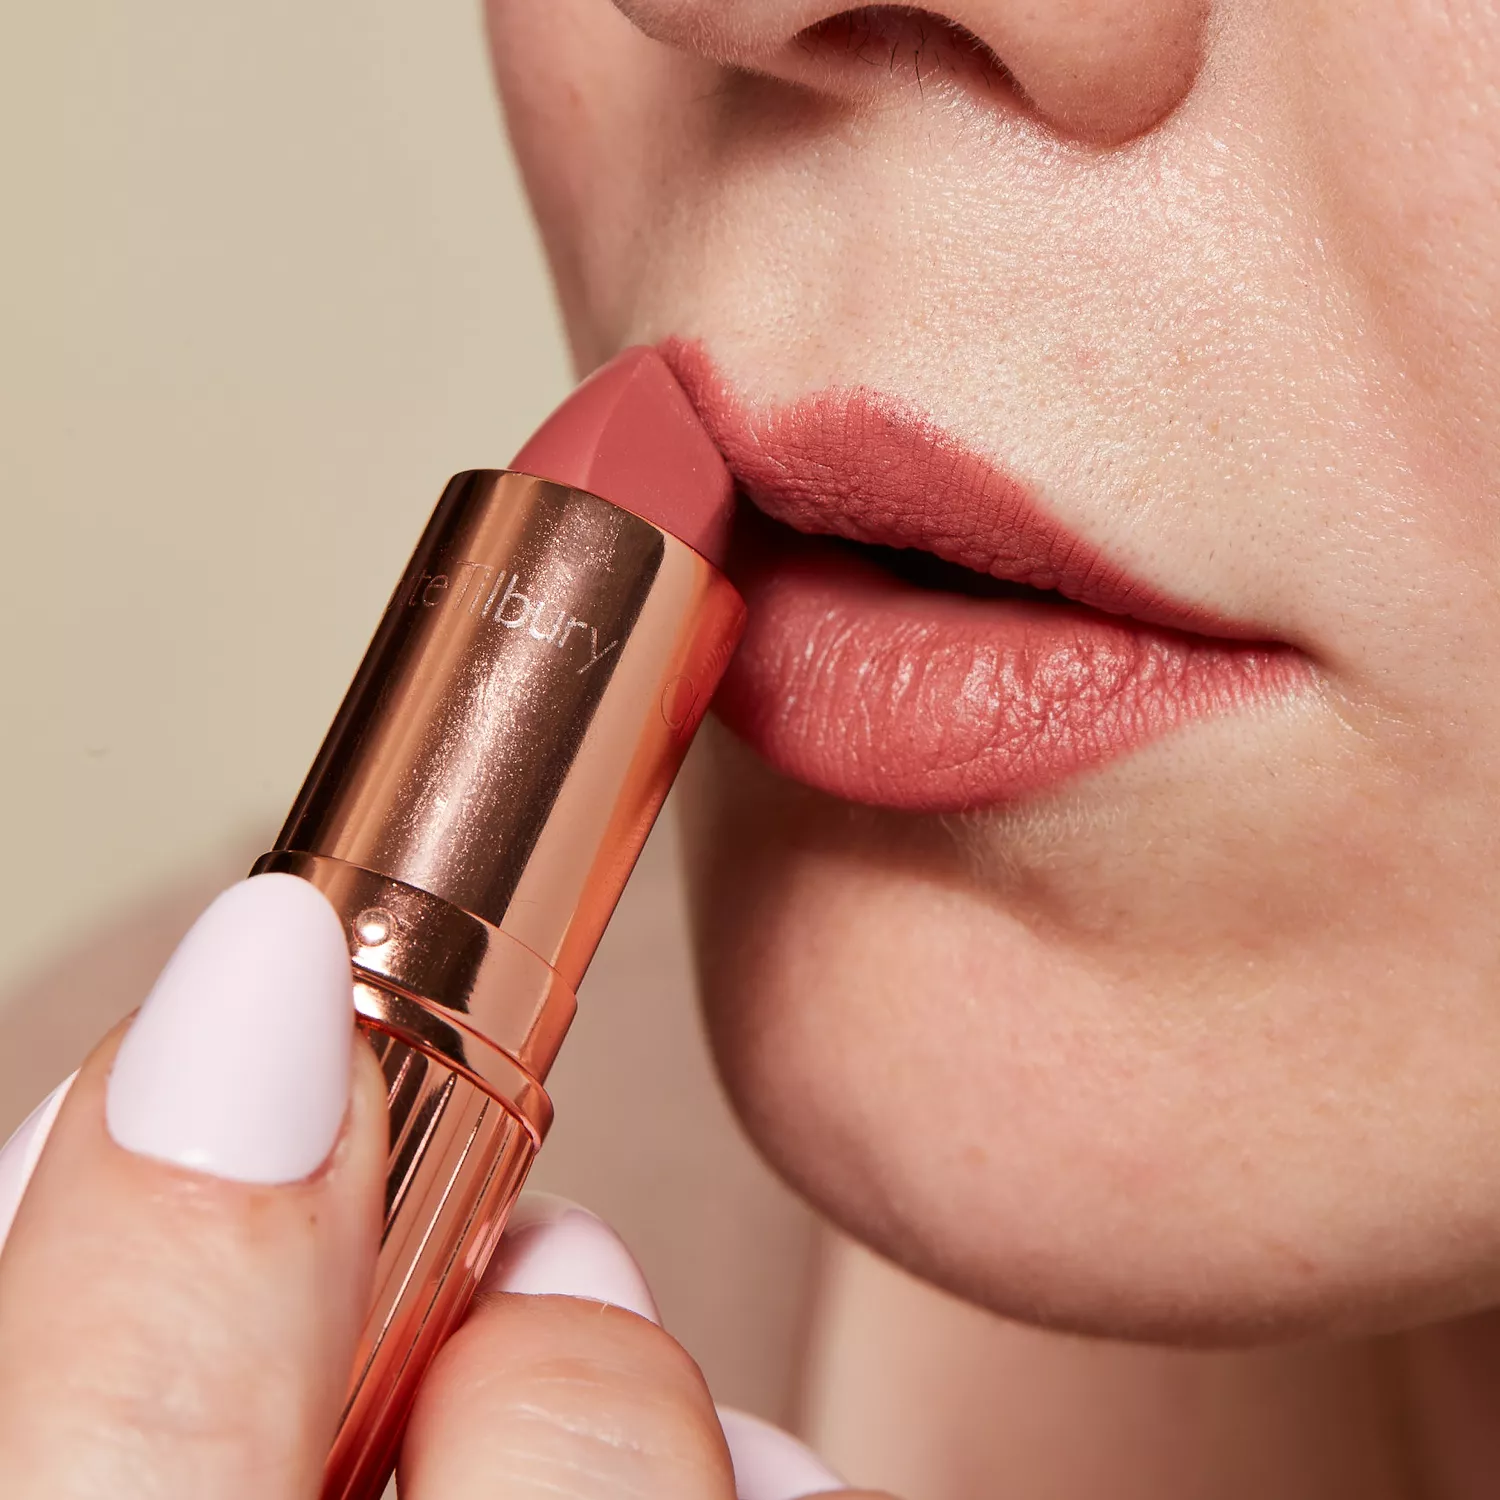 Close up of a woman applying lipstick